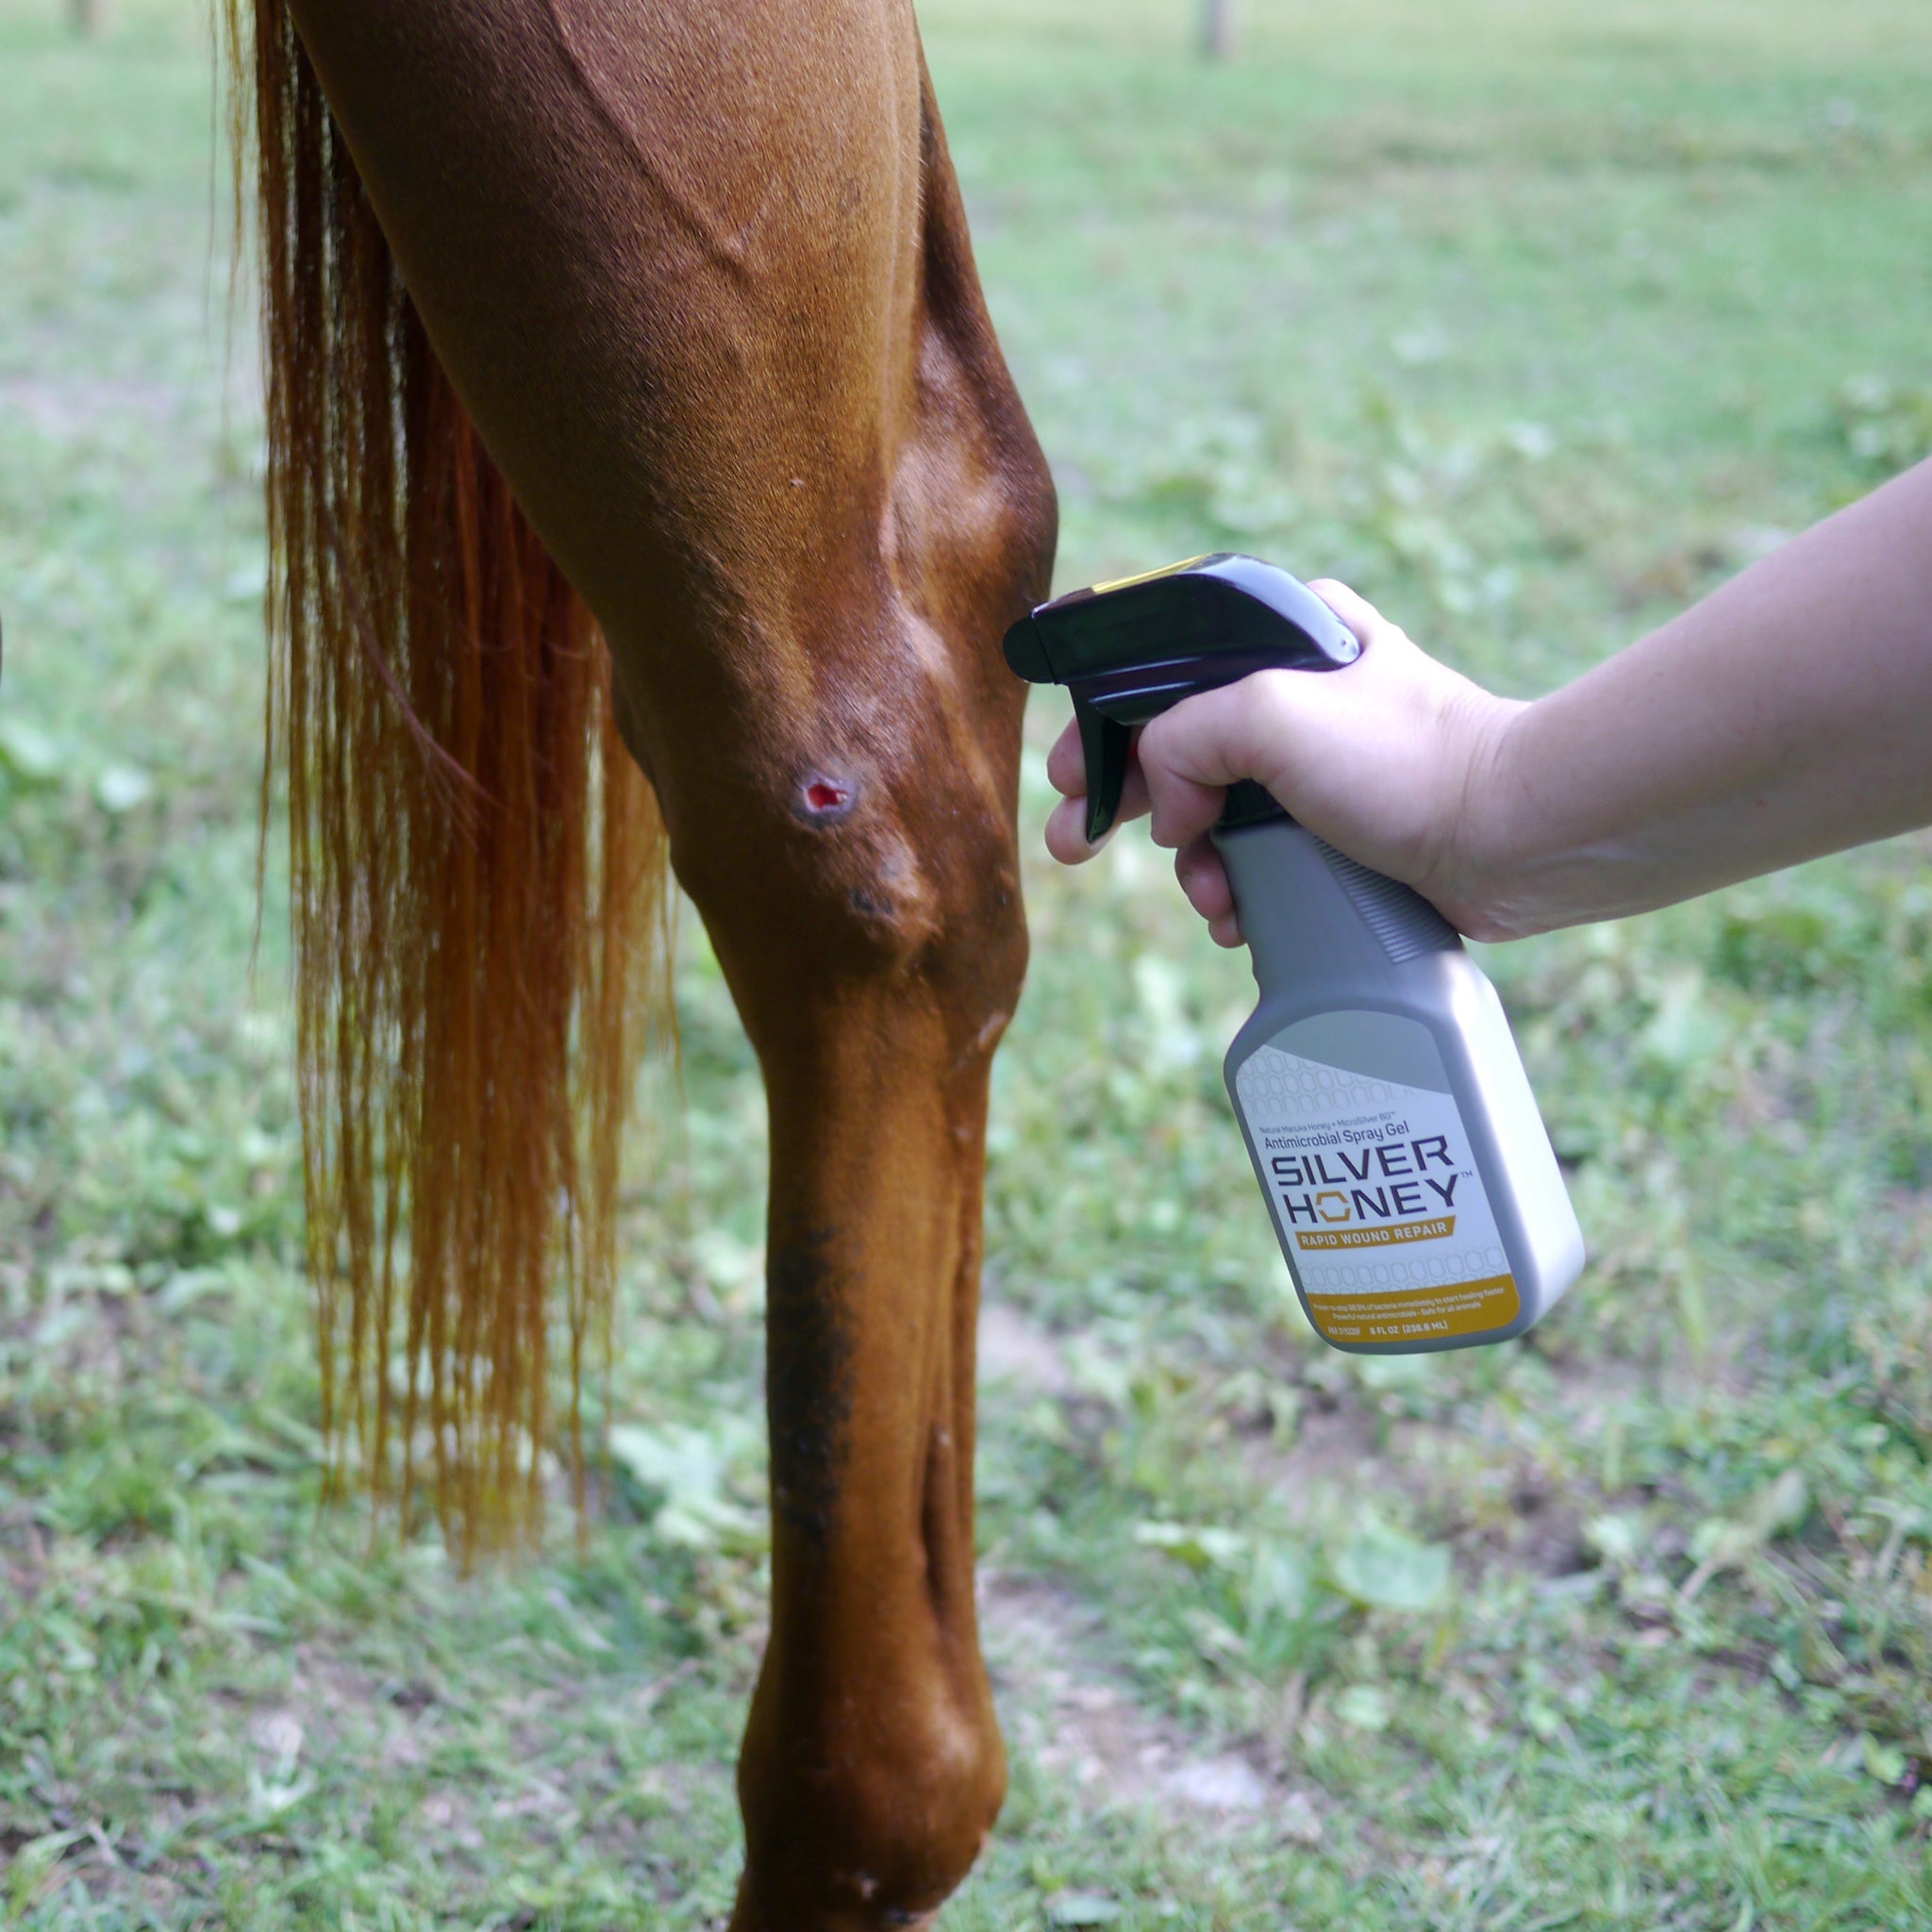  Absorbine Silver Honey Rapid Wound Repair Ointment, Manuka  Honey & MicroSilver BG, Veterinarian Tested Horse & Animal Wound Care, 2oz  Tube : Pet Supplies